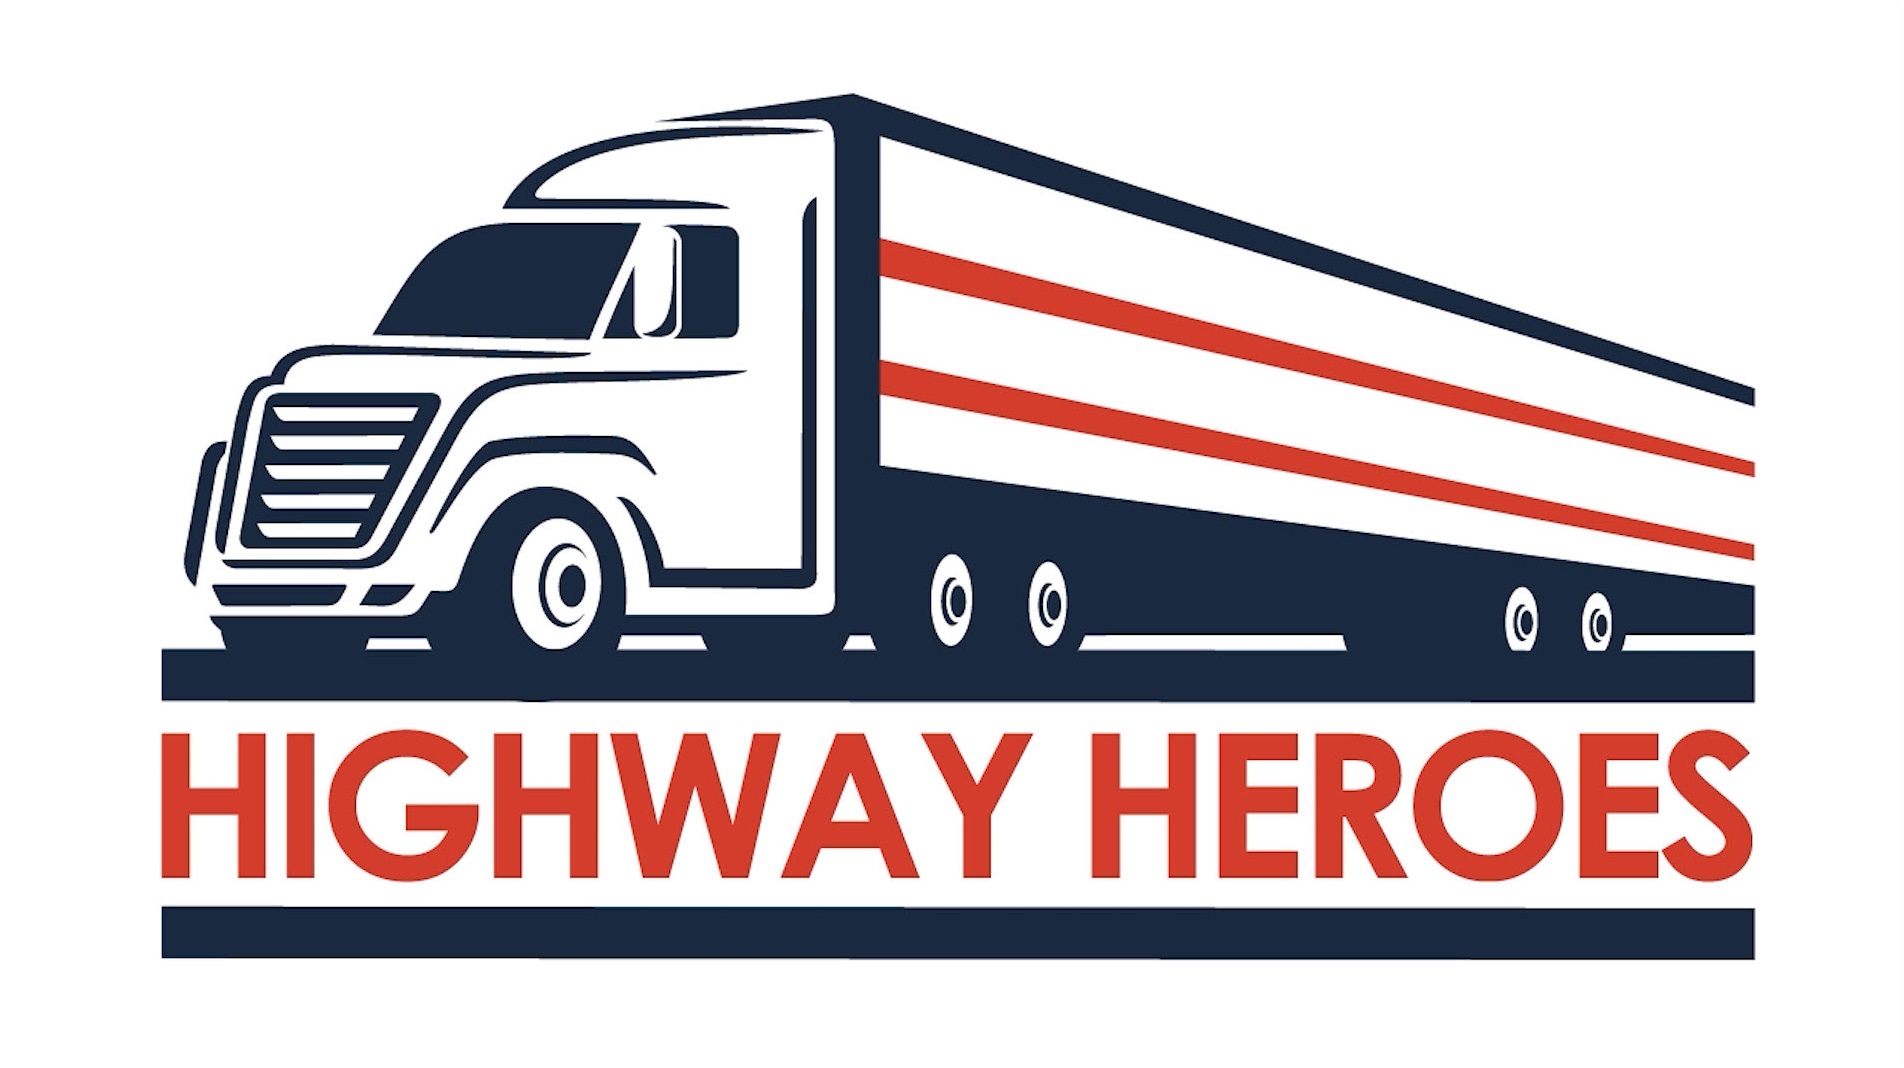 Highway Heroes program